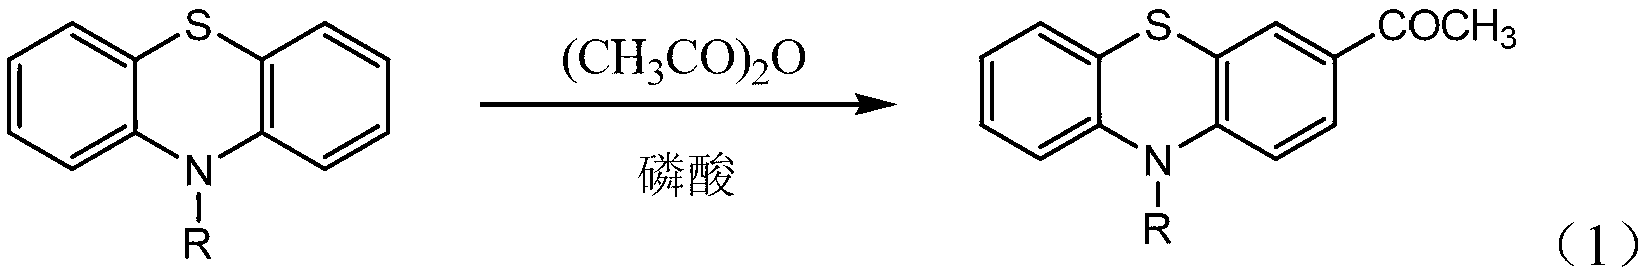 Method for preparing 3-acetyl-10-alkyl phenothiazine